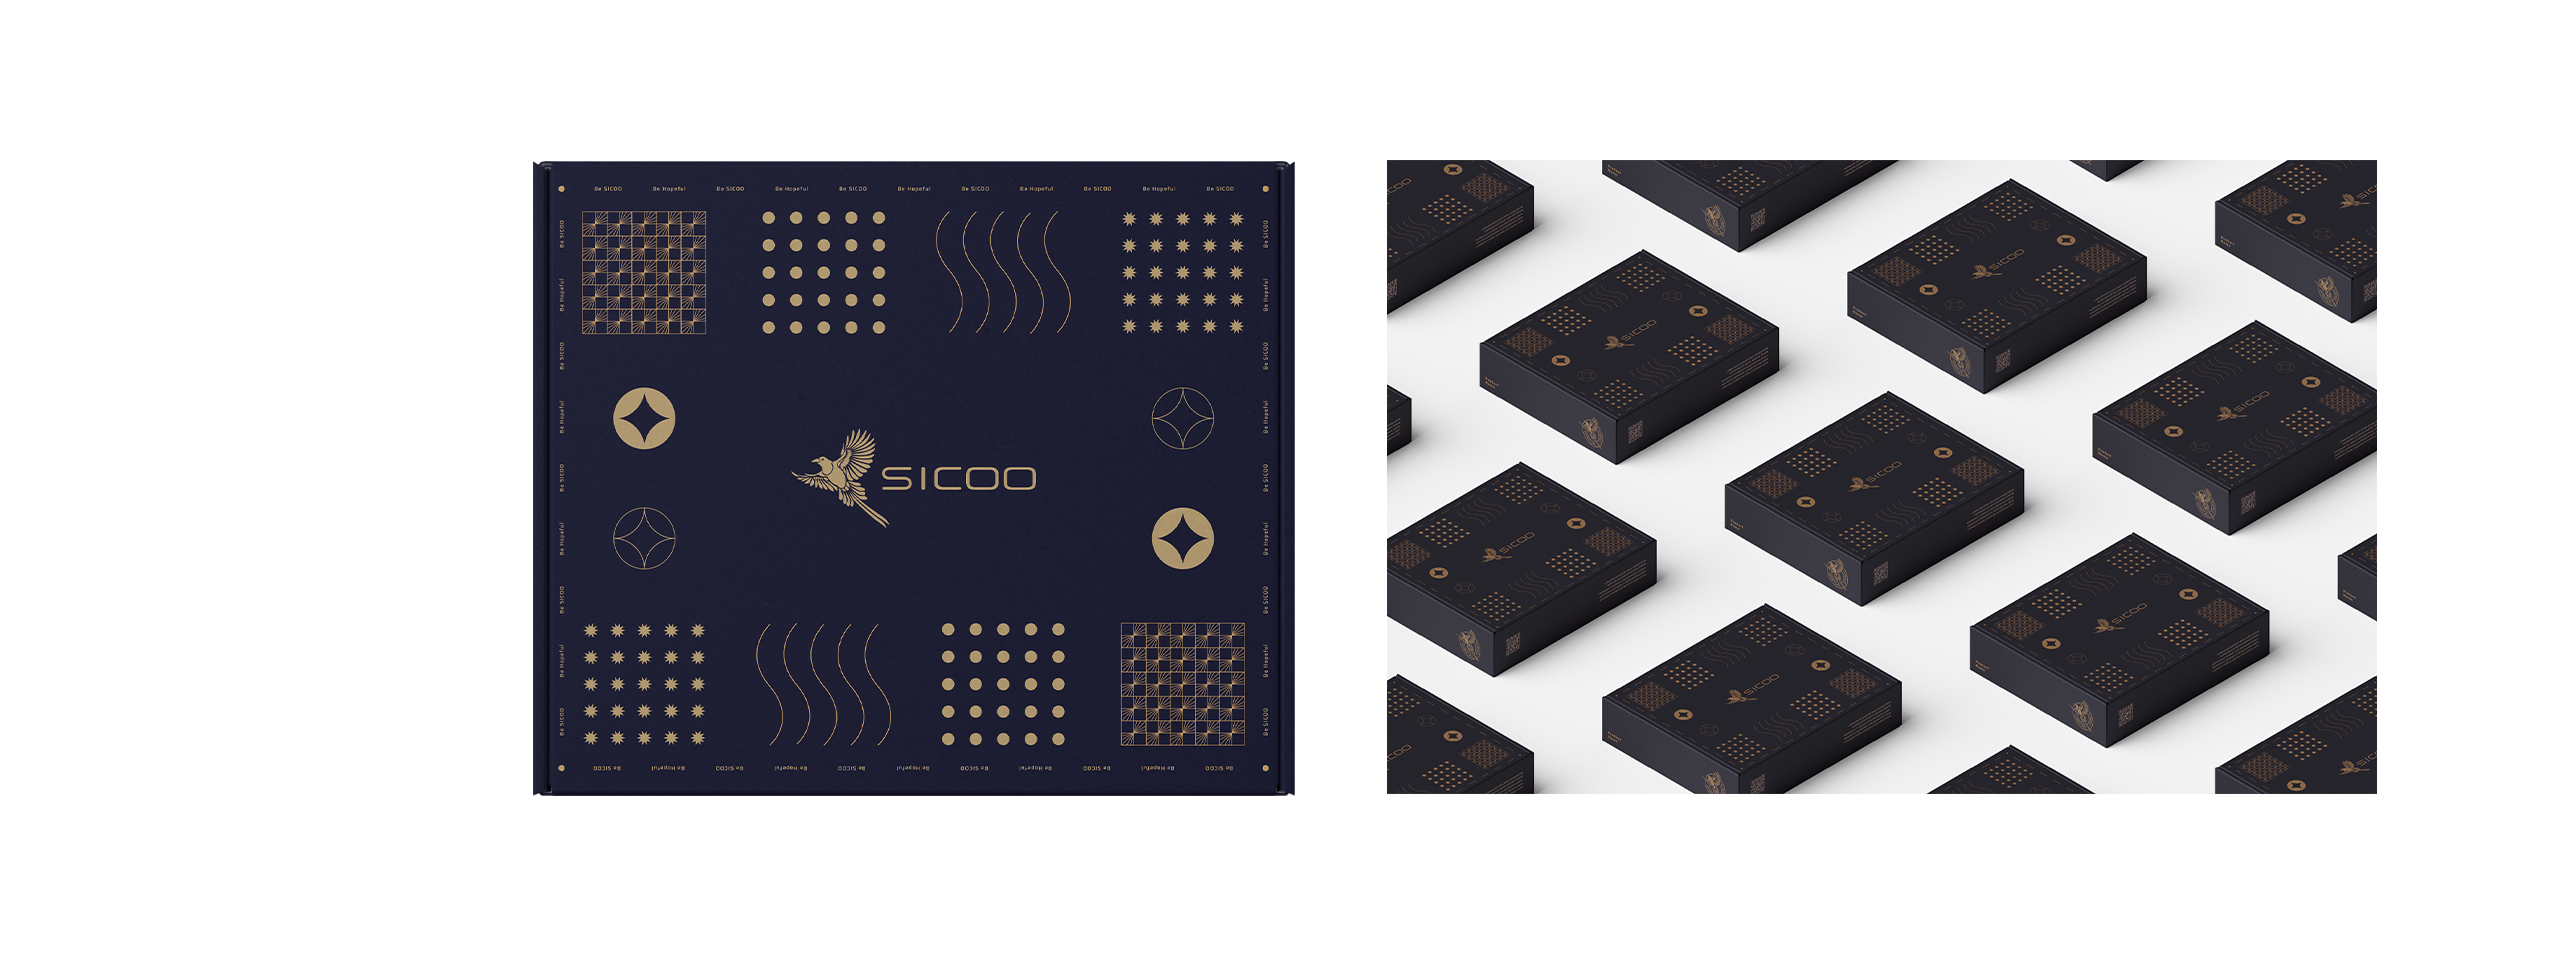 SICOO LOGO品牌識別優化與建立 [平面設計/品牌設計/logo設計/cis識別/vis設計]電腦版(7)